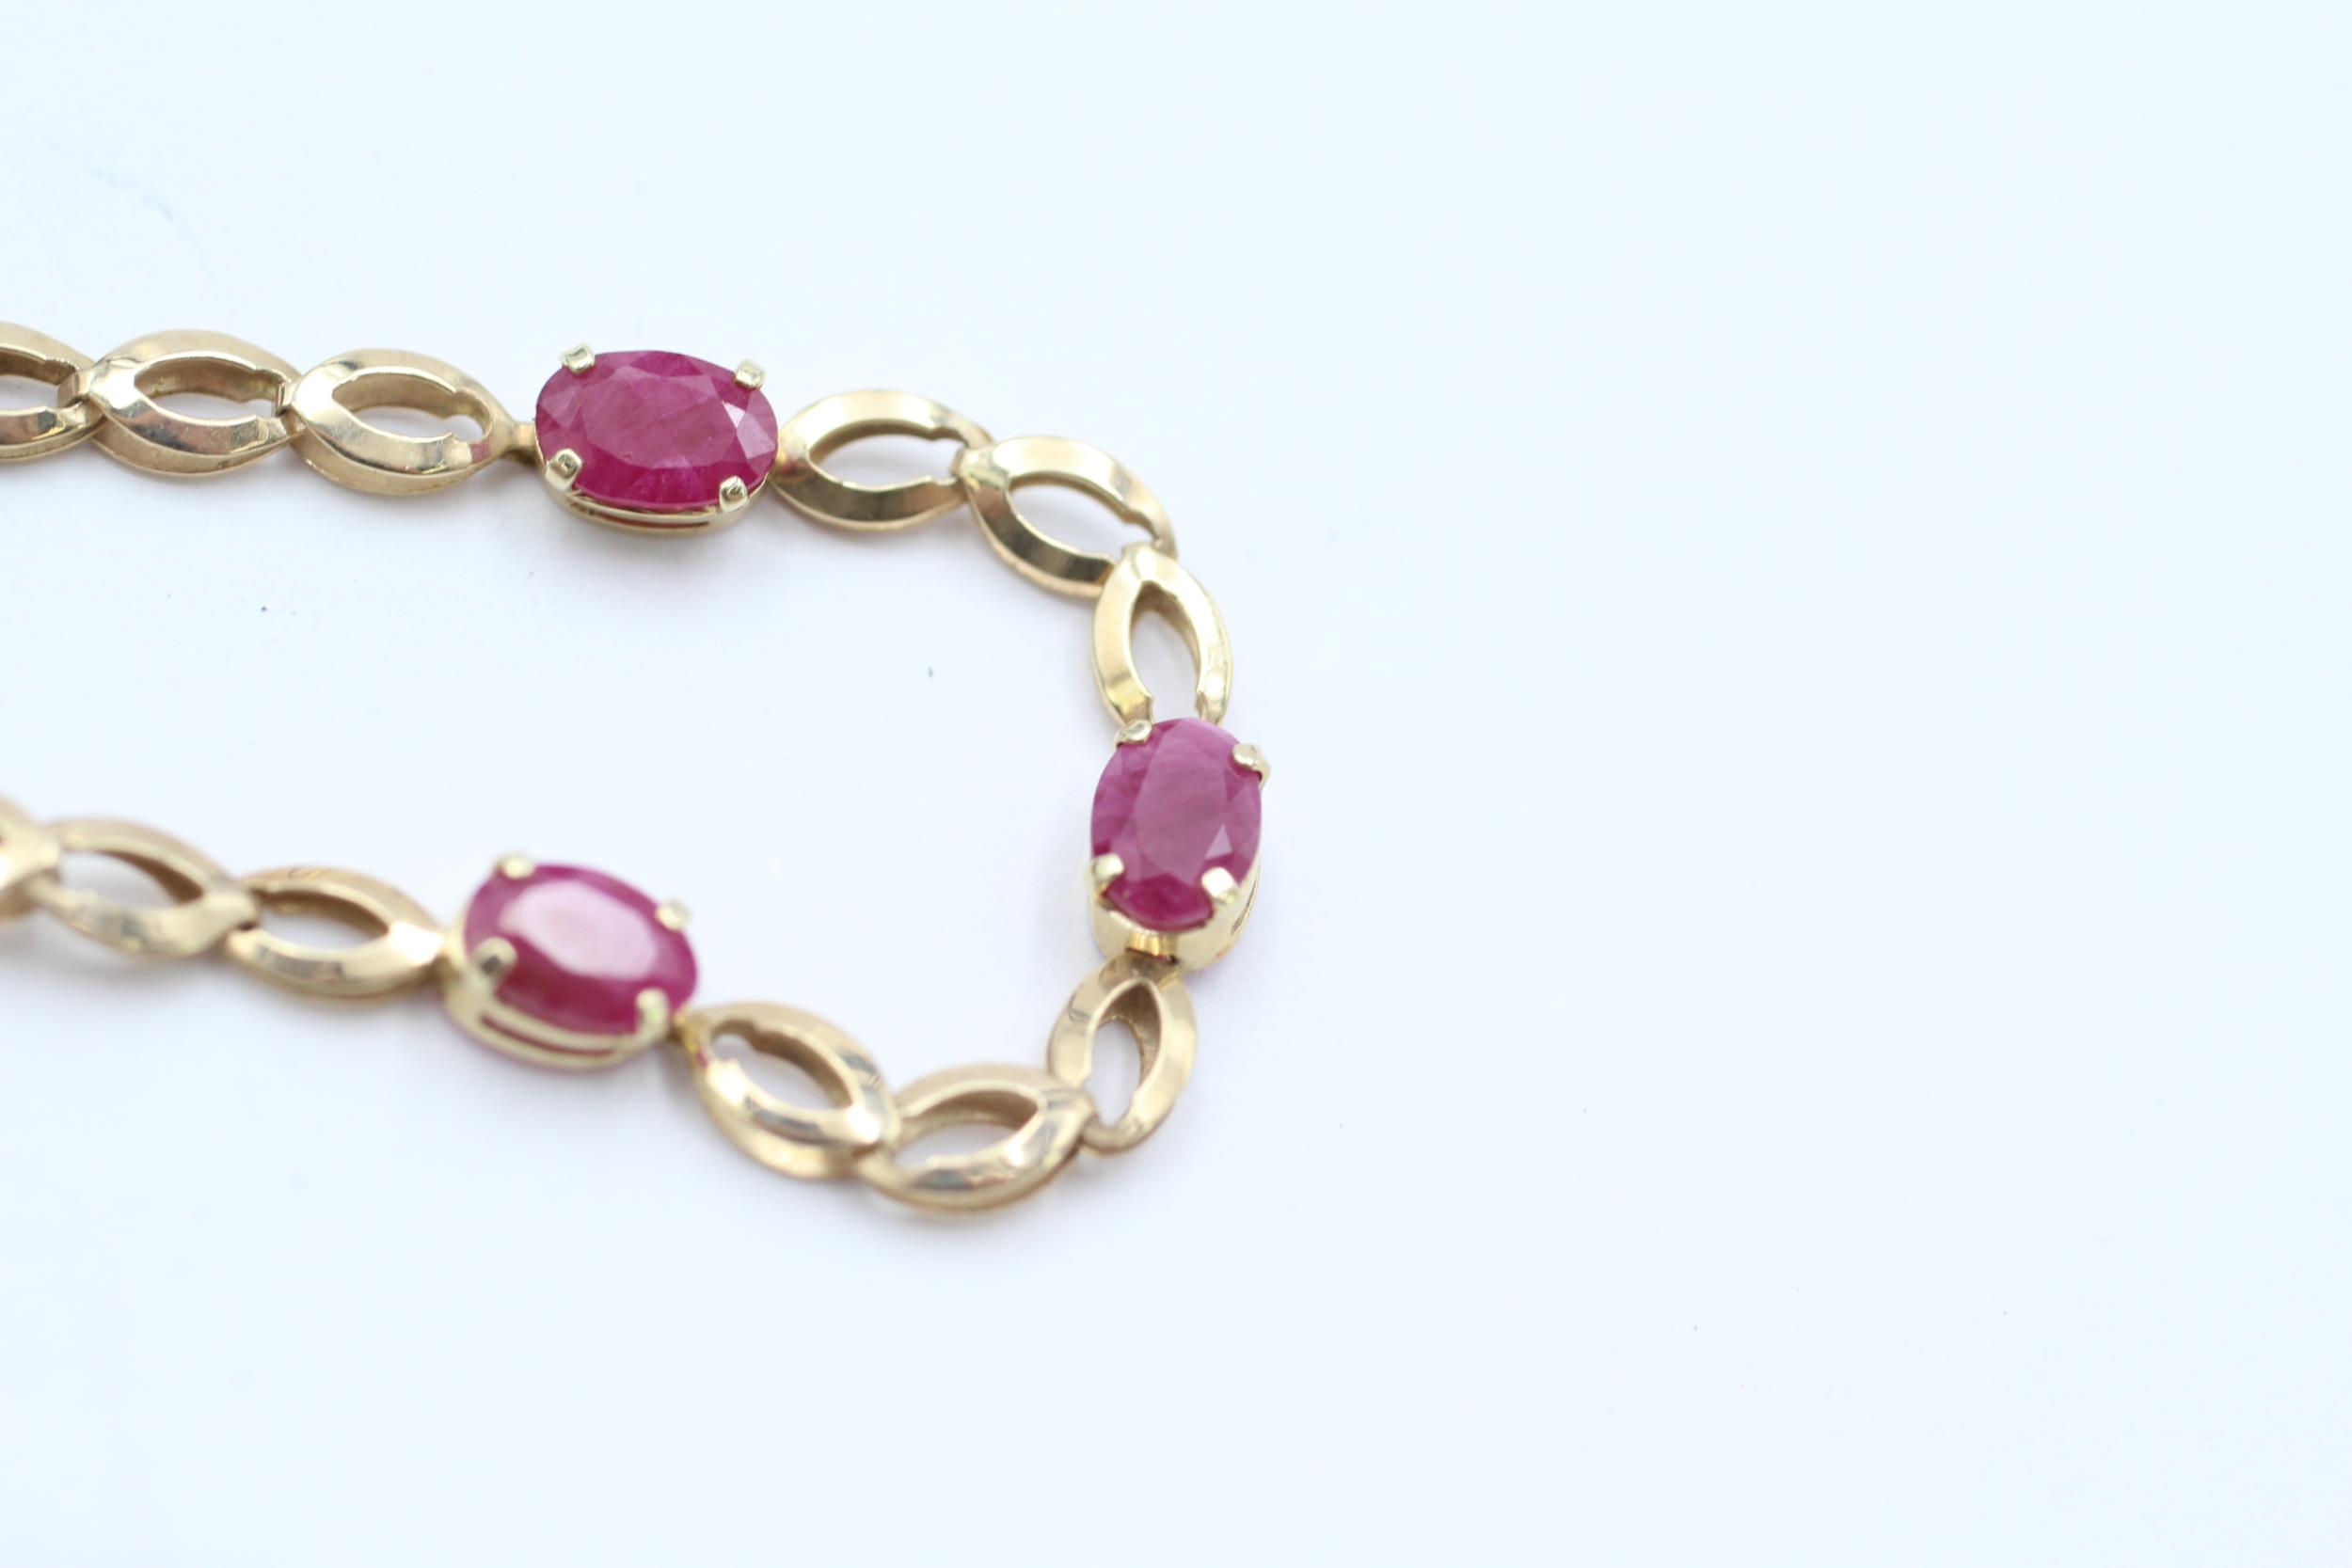 10ct gold ruby bracelet - 2.8 g - Image 2 of 5